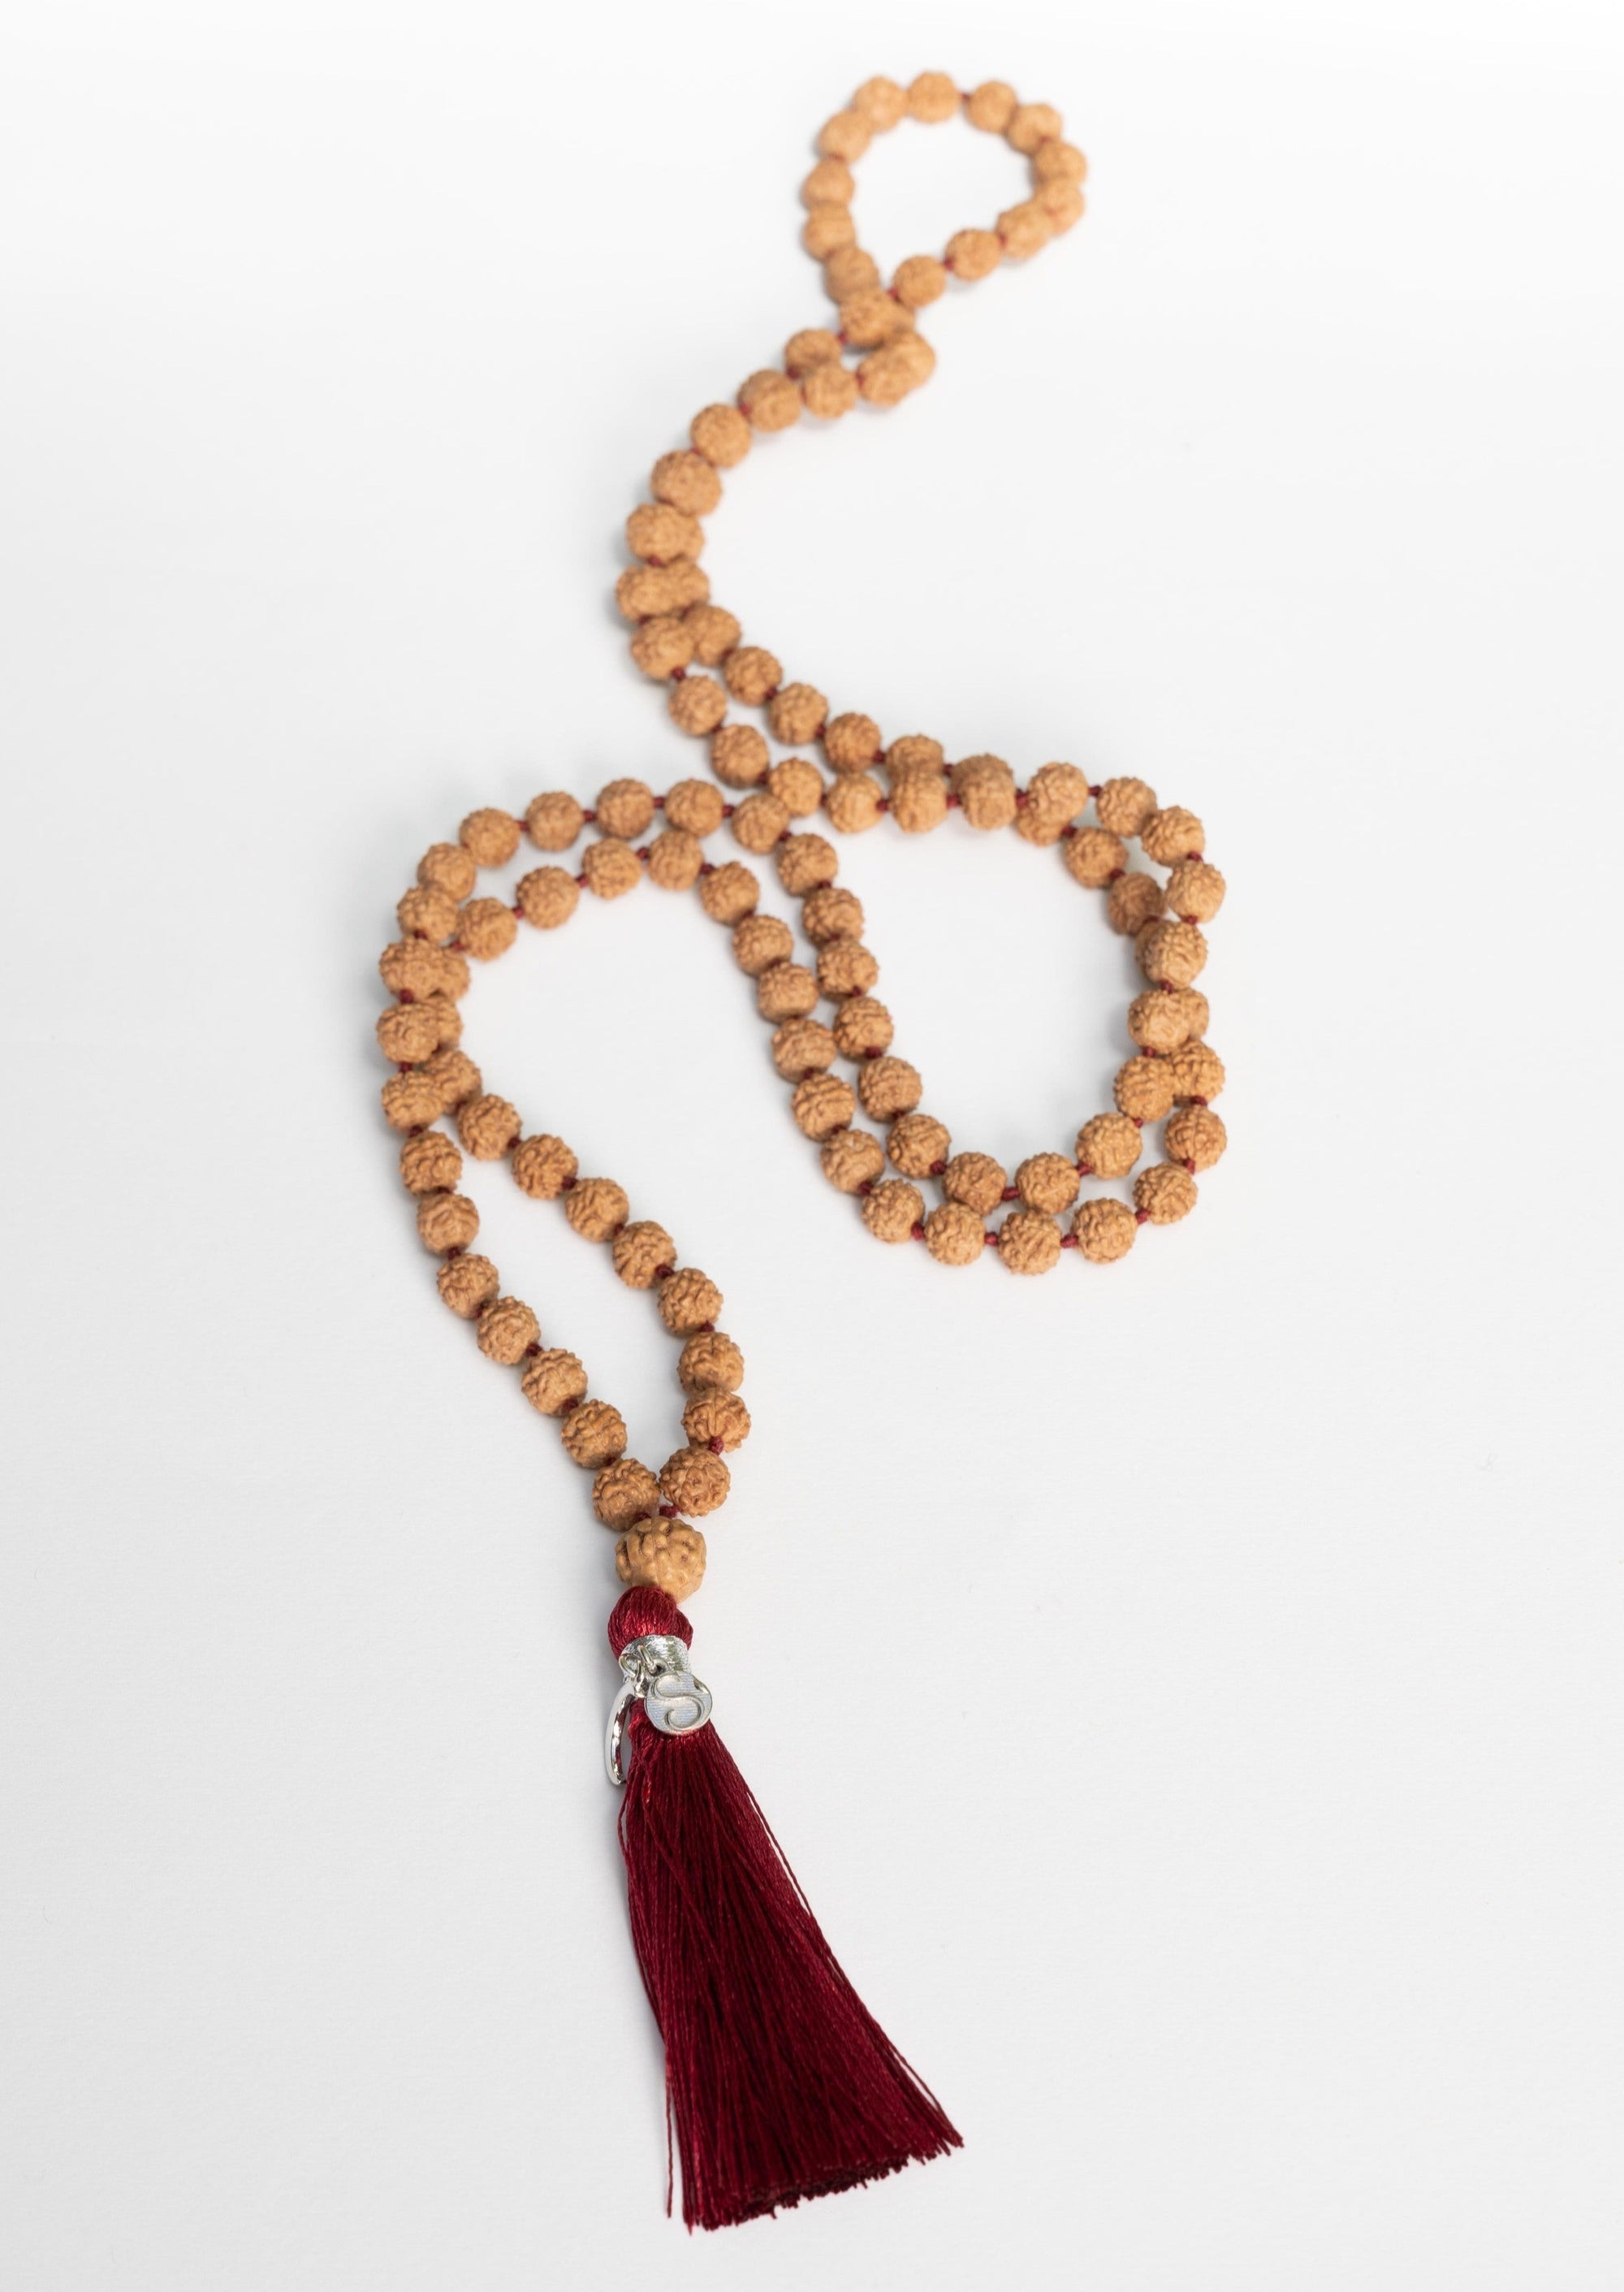 Japa Mala | Meditation Mala | Rudraksha Mala Beads Australia 